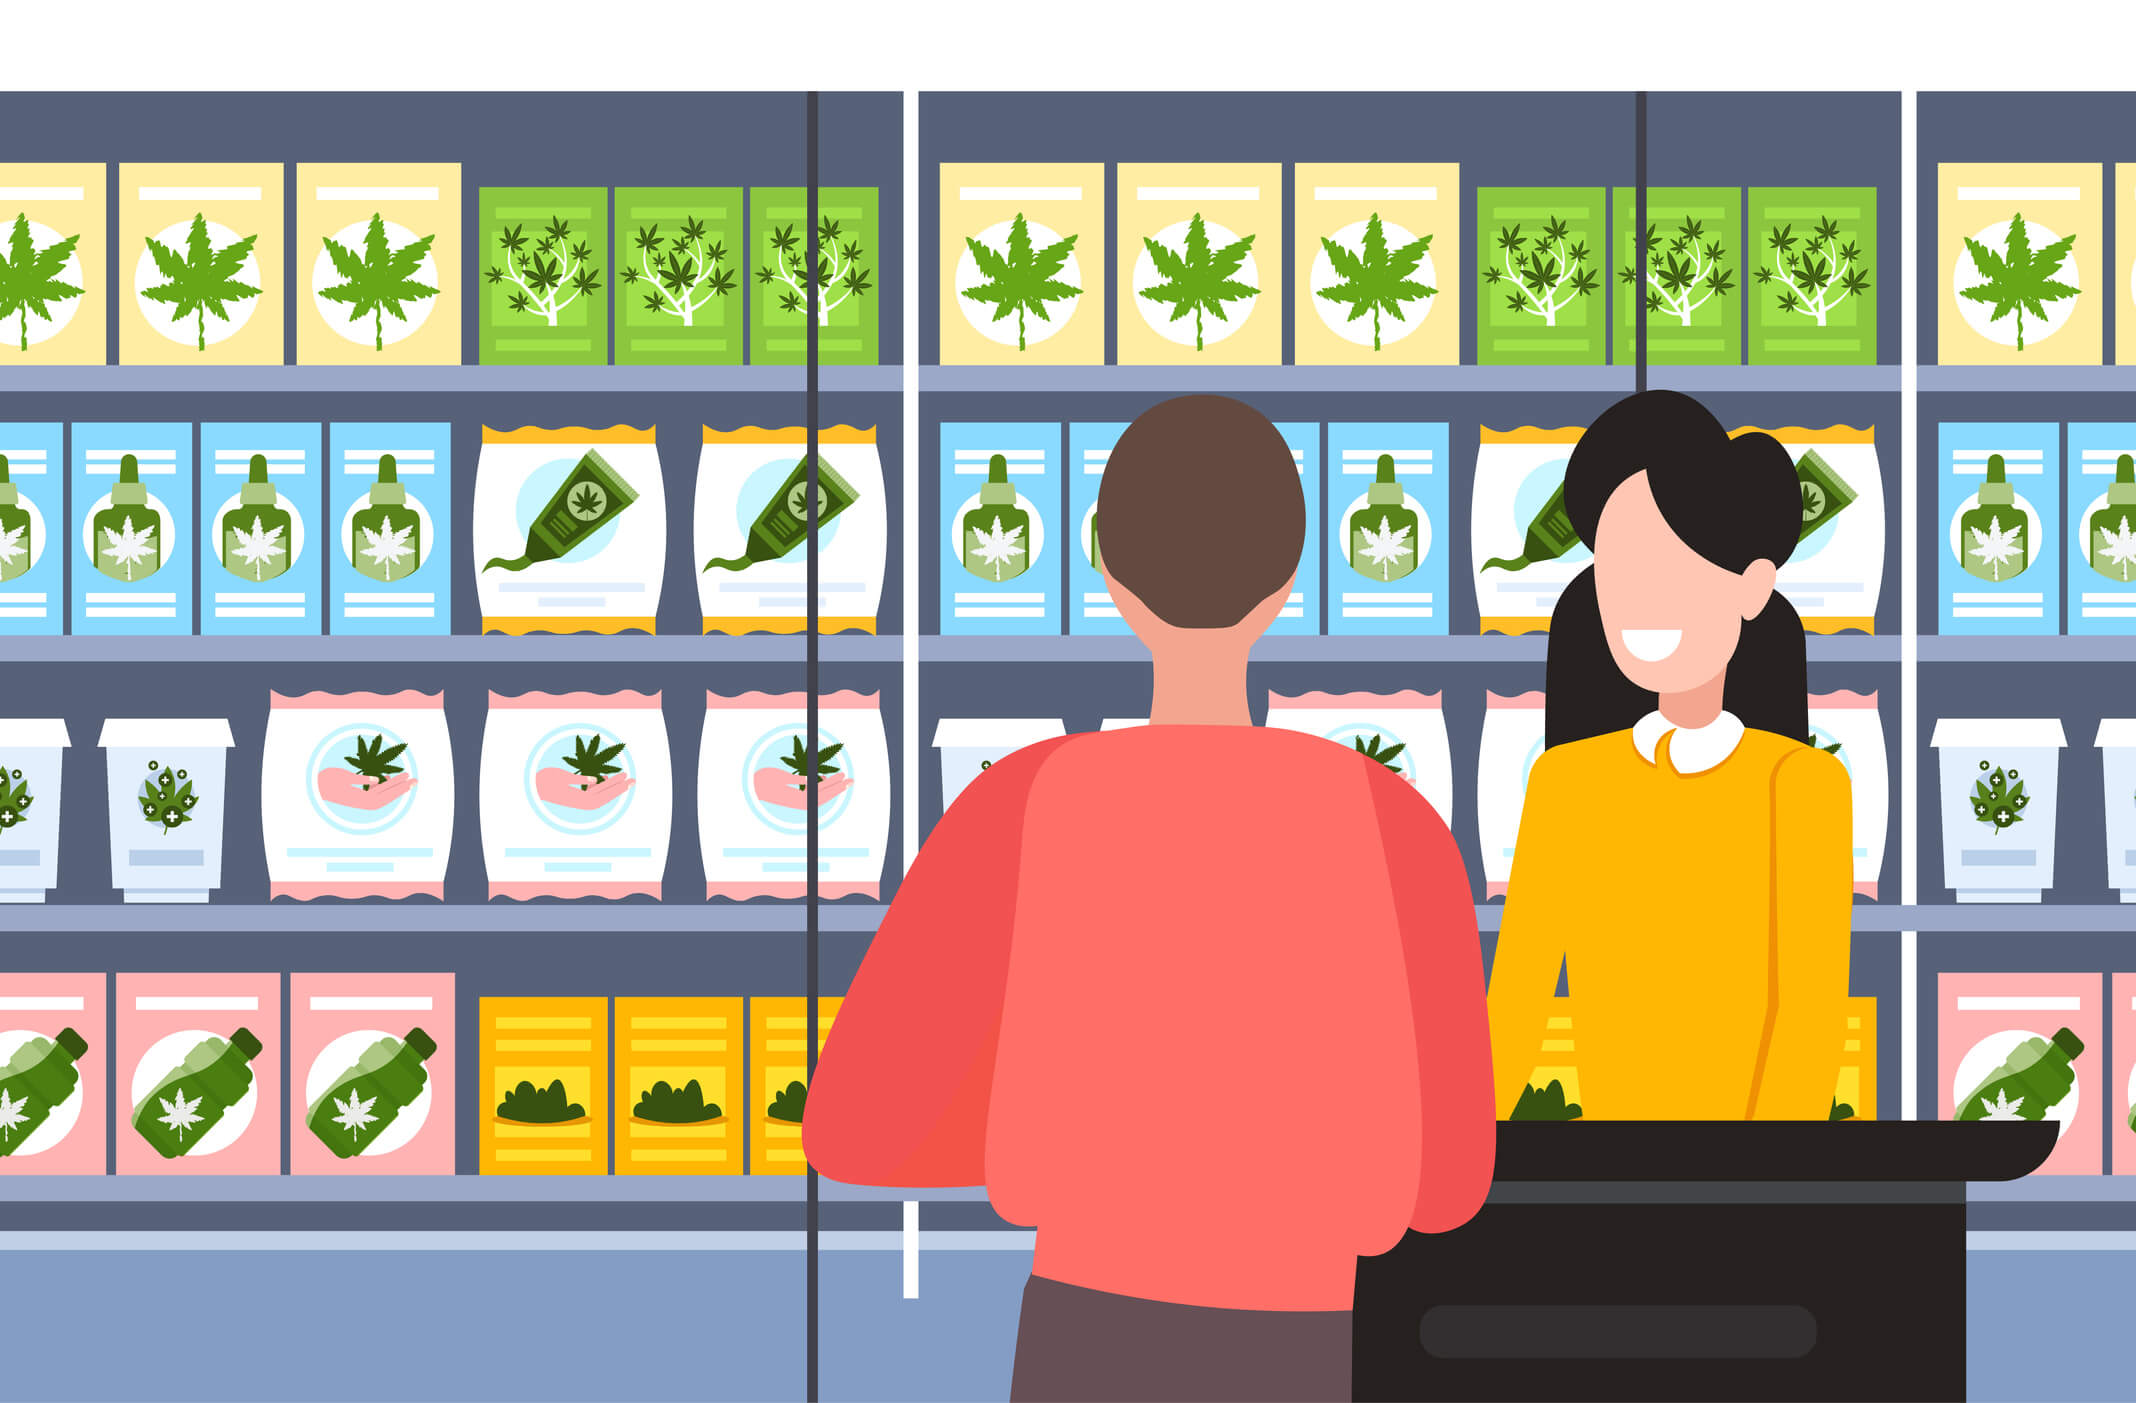 Recreational Marijuana Dispensaries - Complete Controller